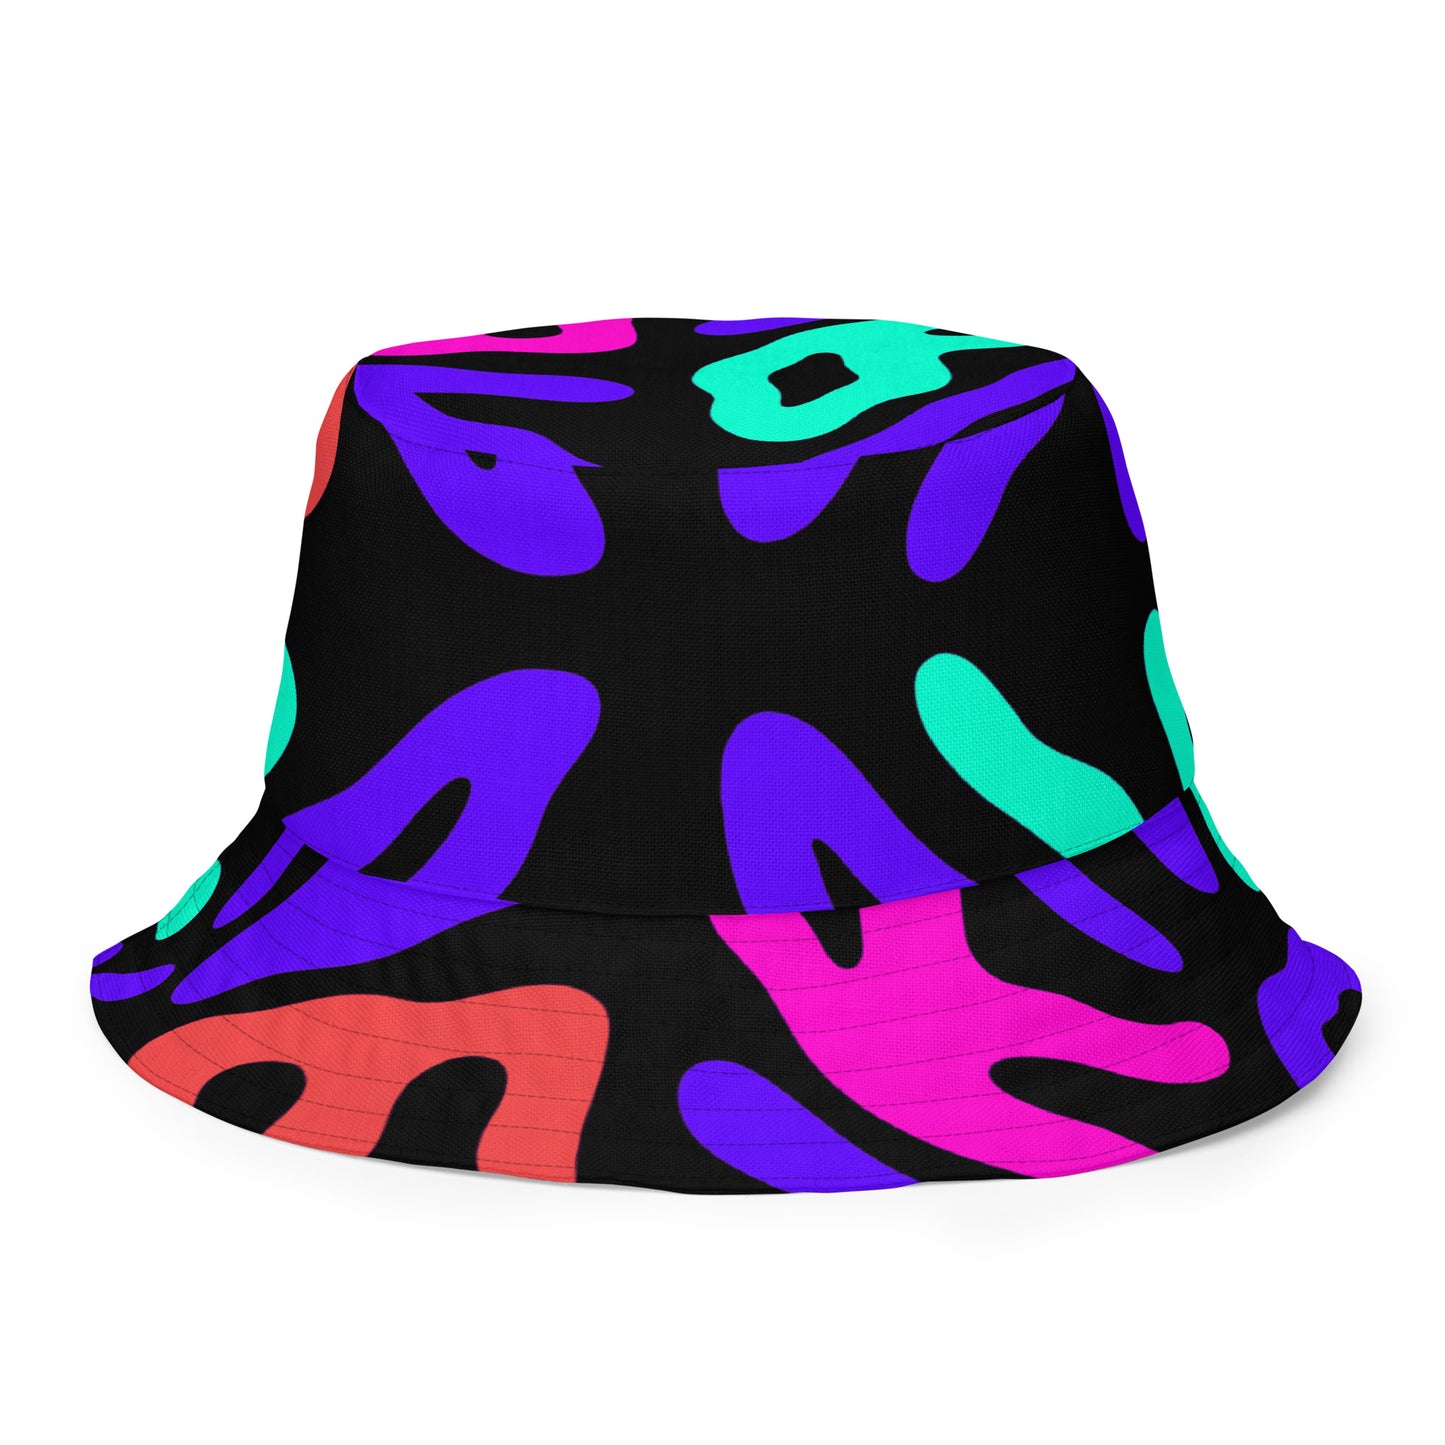 Rave Crave bucket hat